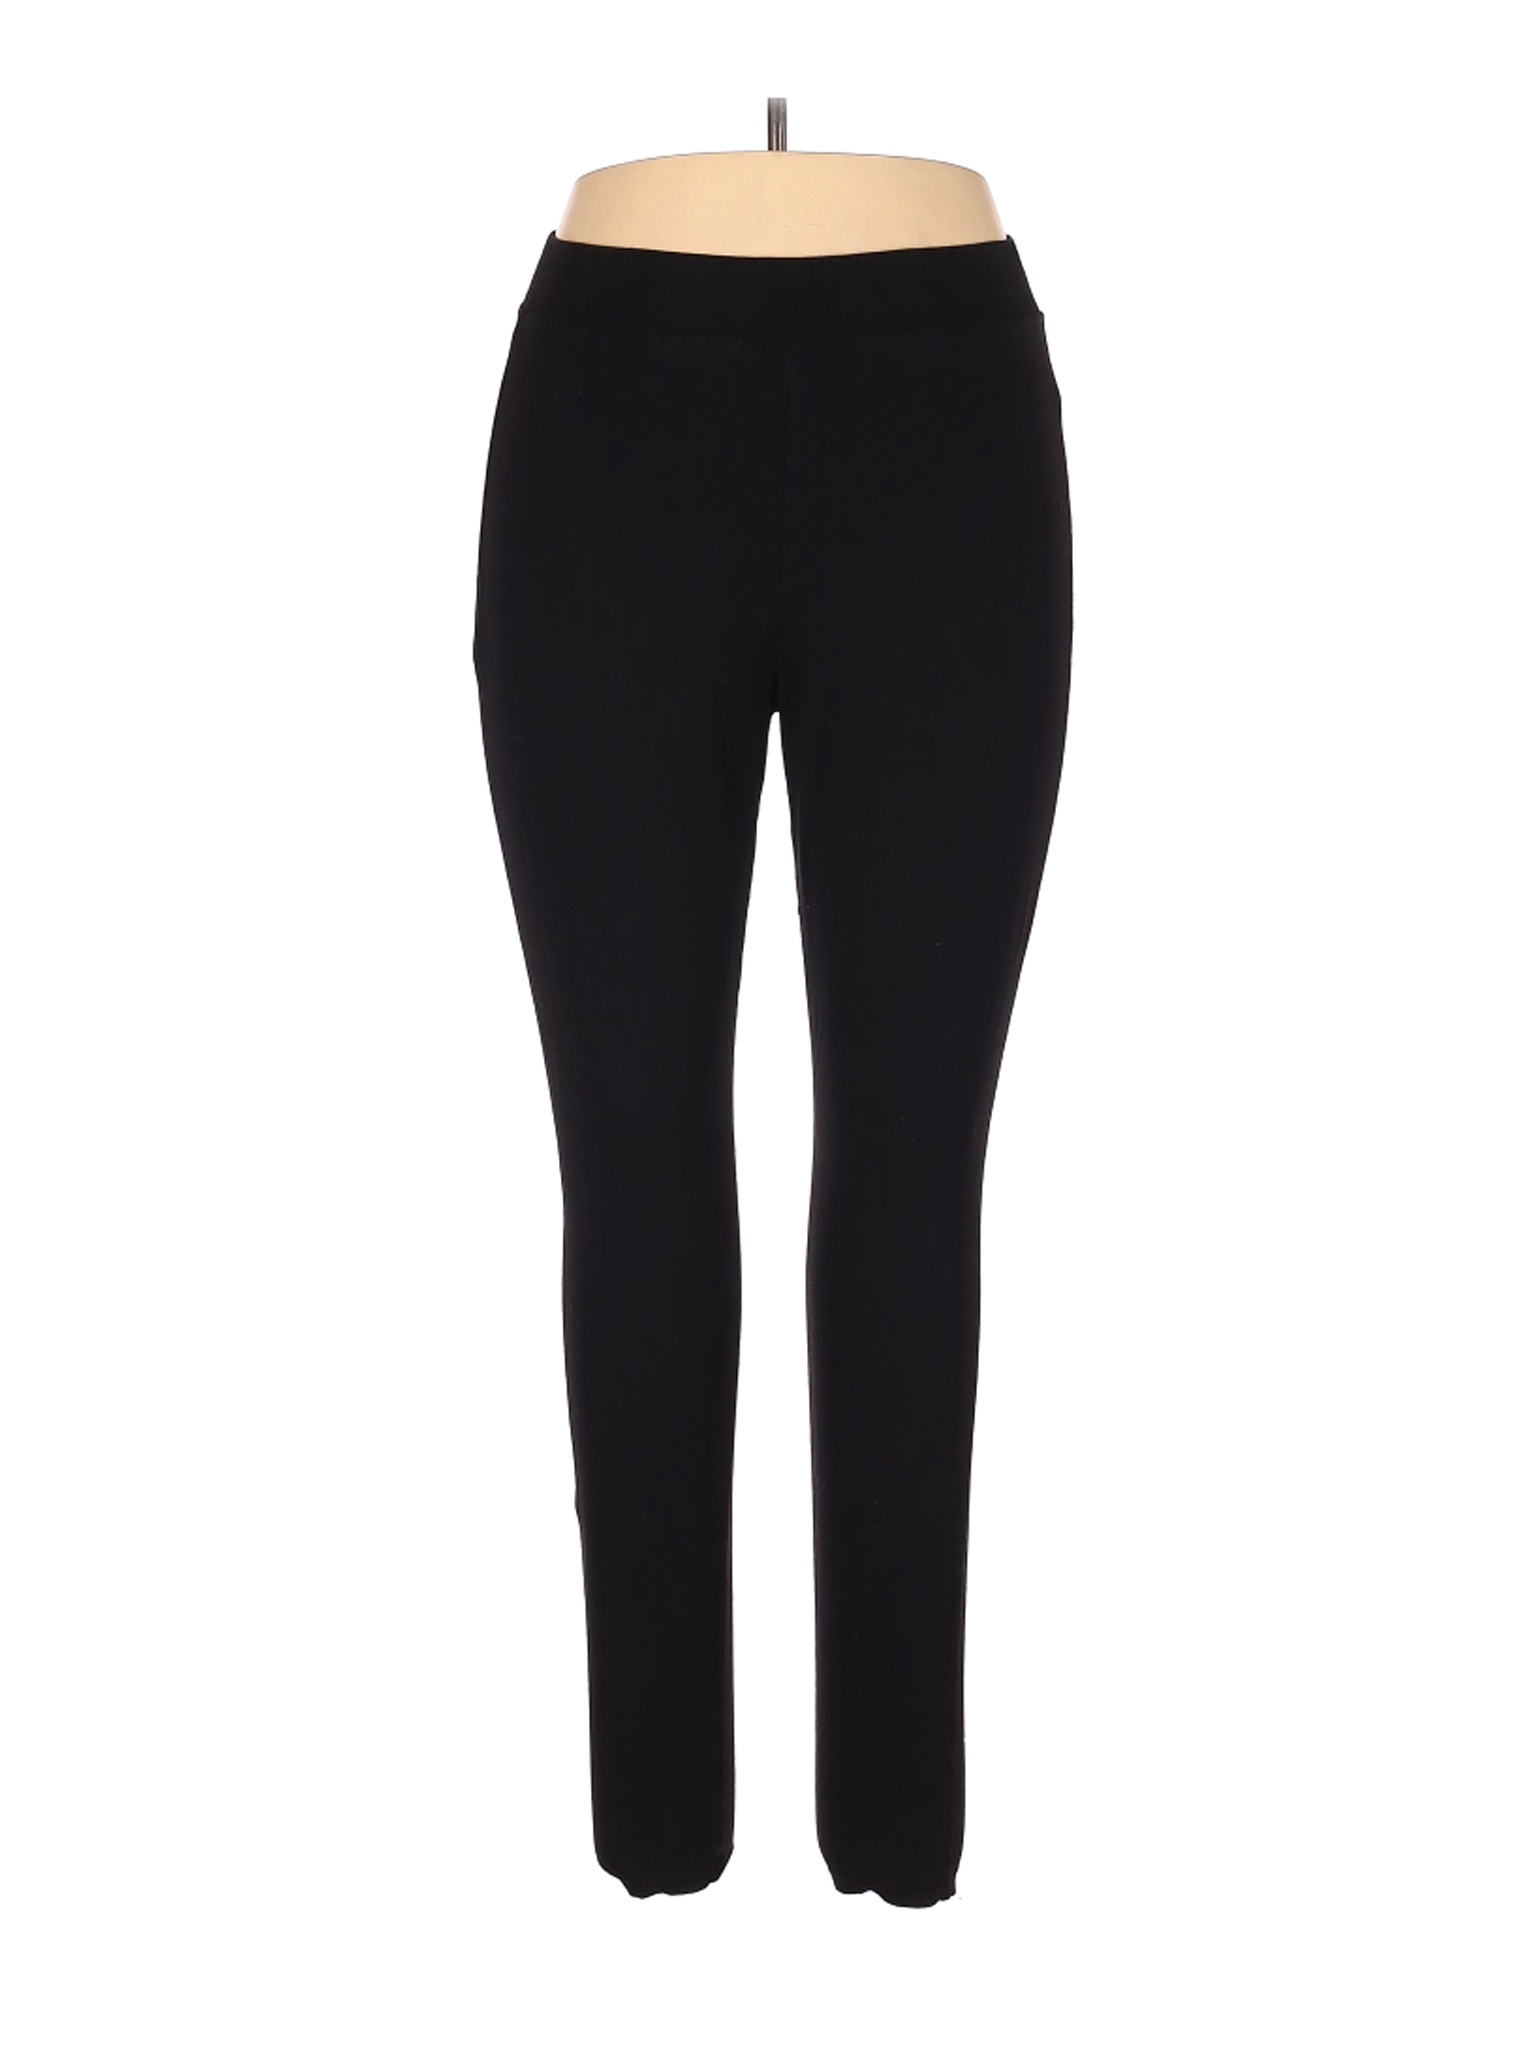 Torrid Women Black Casual Pants 2X Plus | eBay